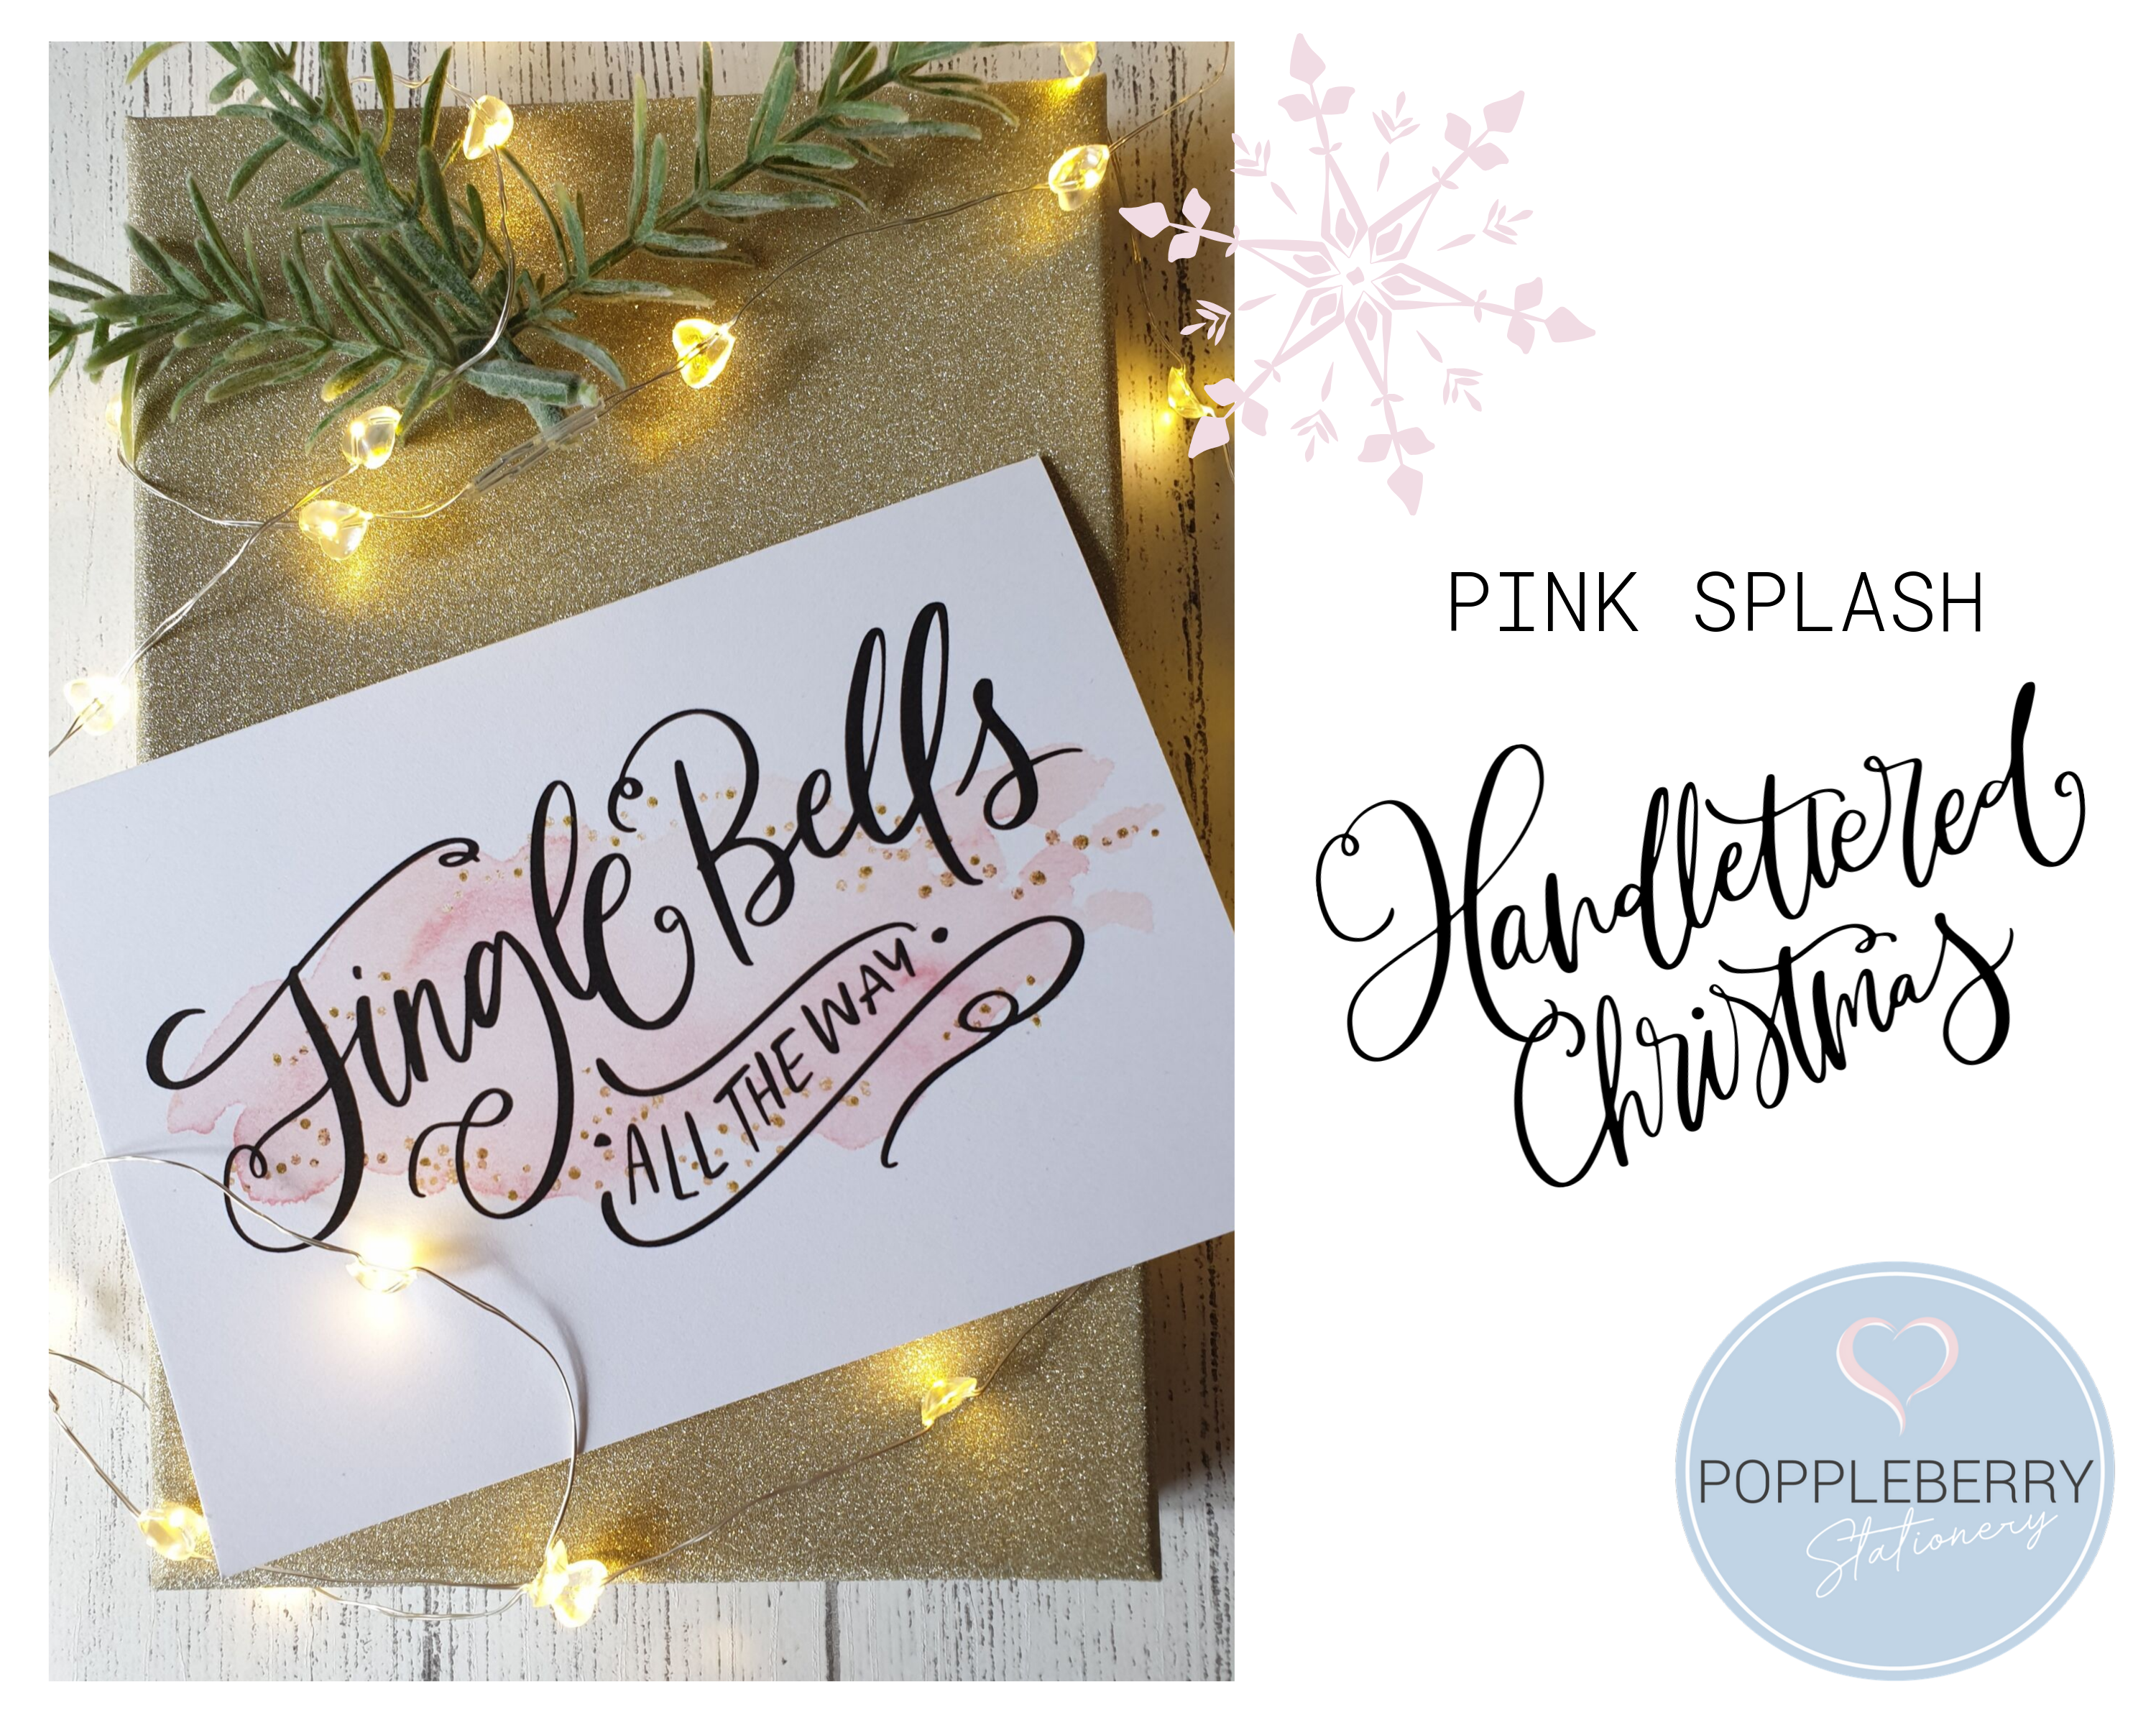 Poppleberry A6 'Jingle Bells' Modern Pink Watercolour Splash Christmas Card with Gold Sparkle Glitter.